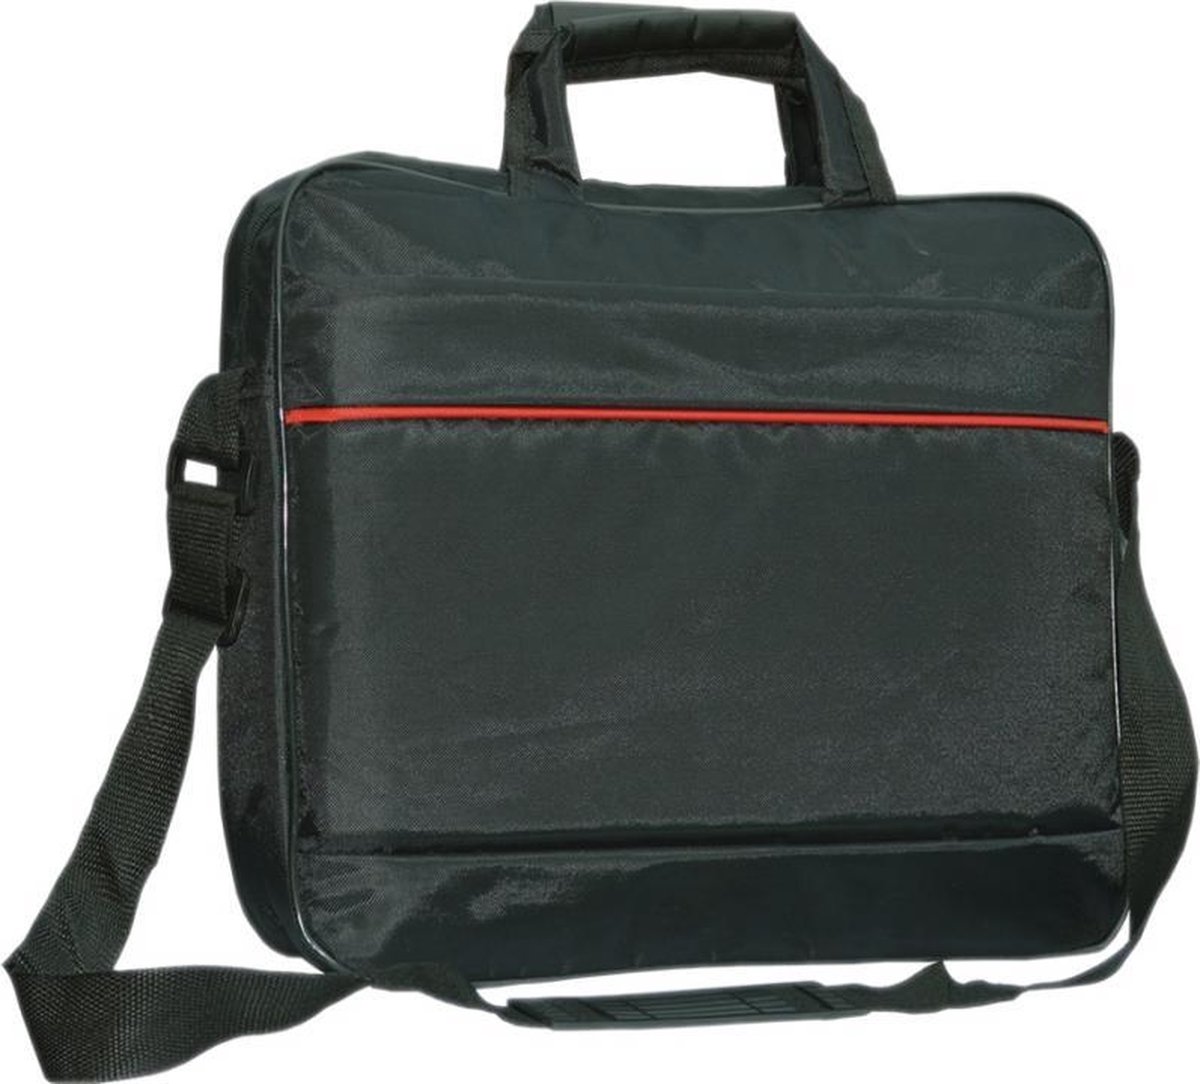 Asus R453la Wx174h laptoptas messenger bag / schoudertas / tas , zwart , merk i12Cover